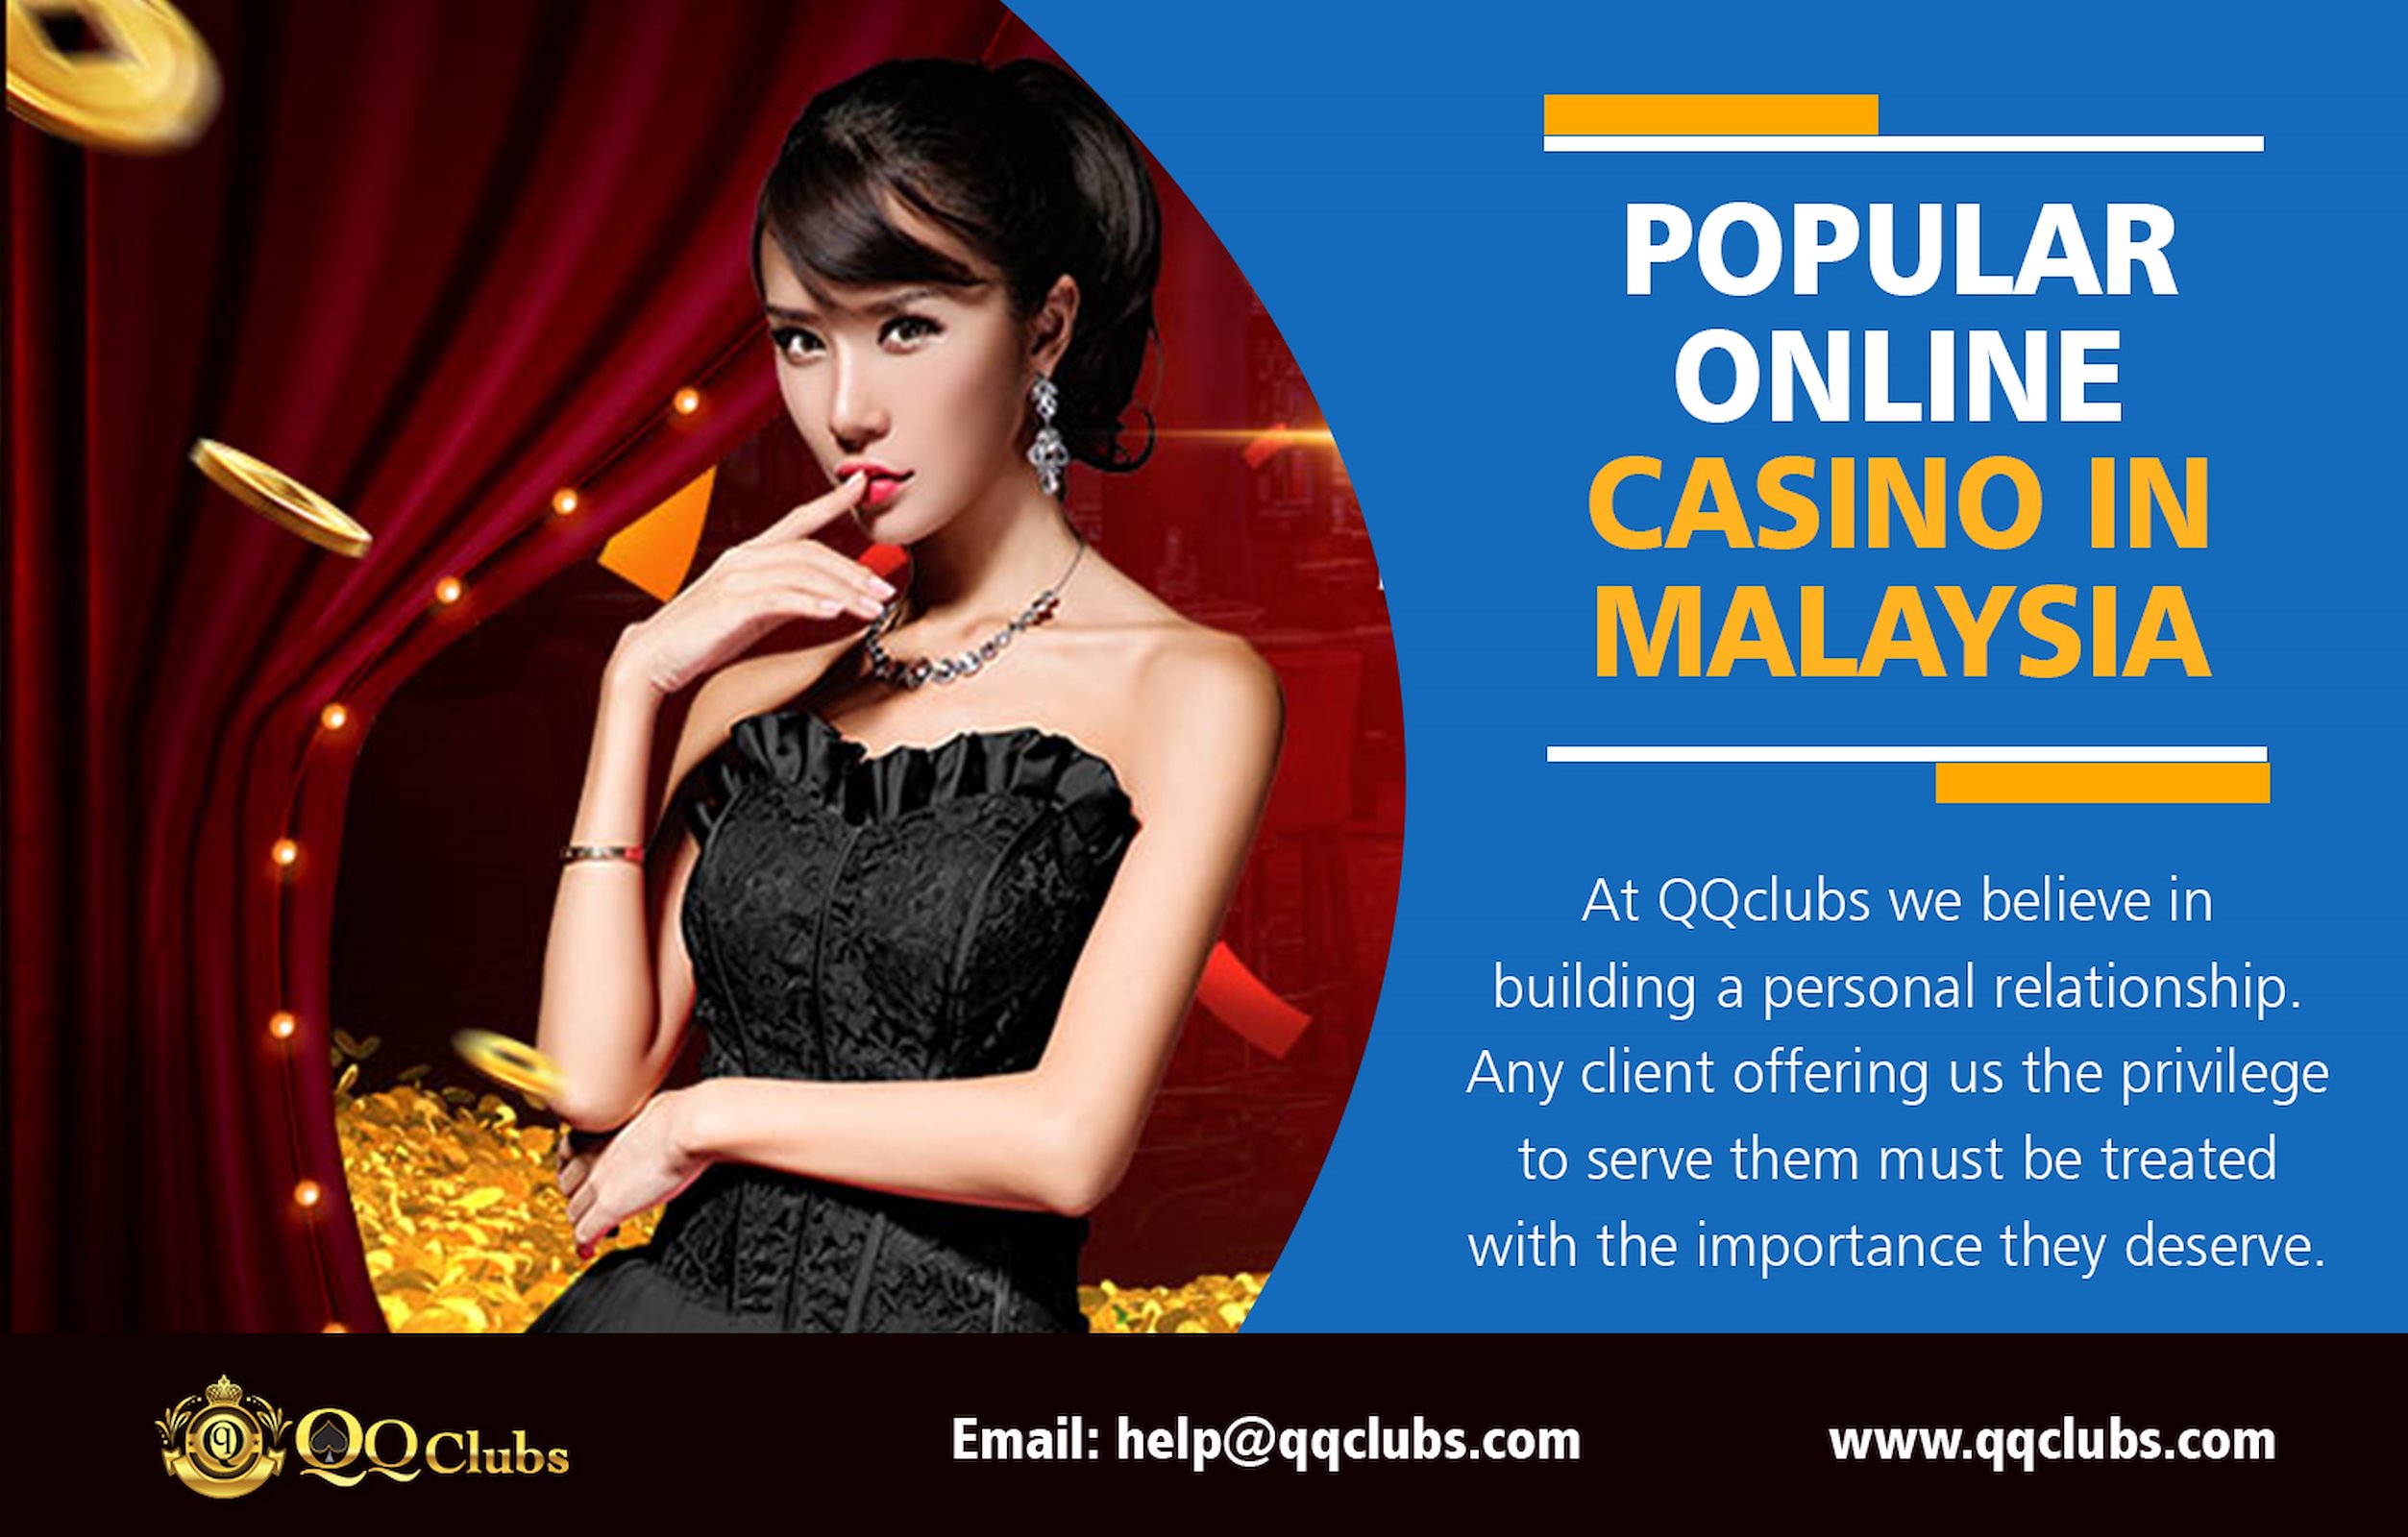 malaysia casino online free credit 2019 fora